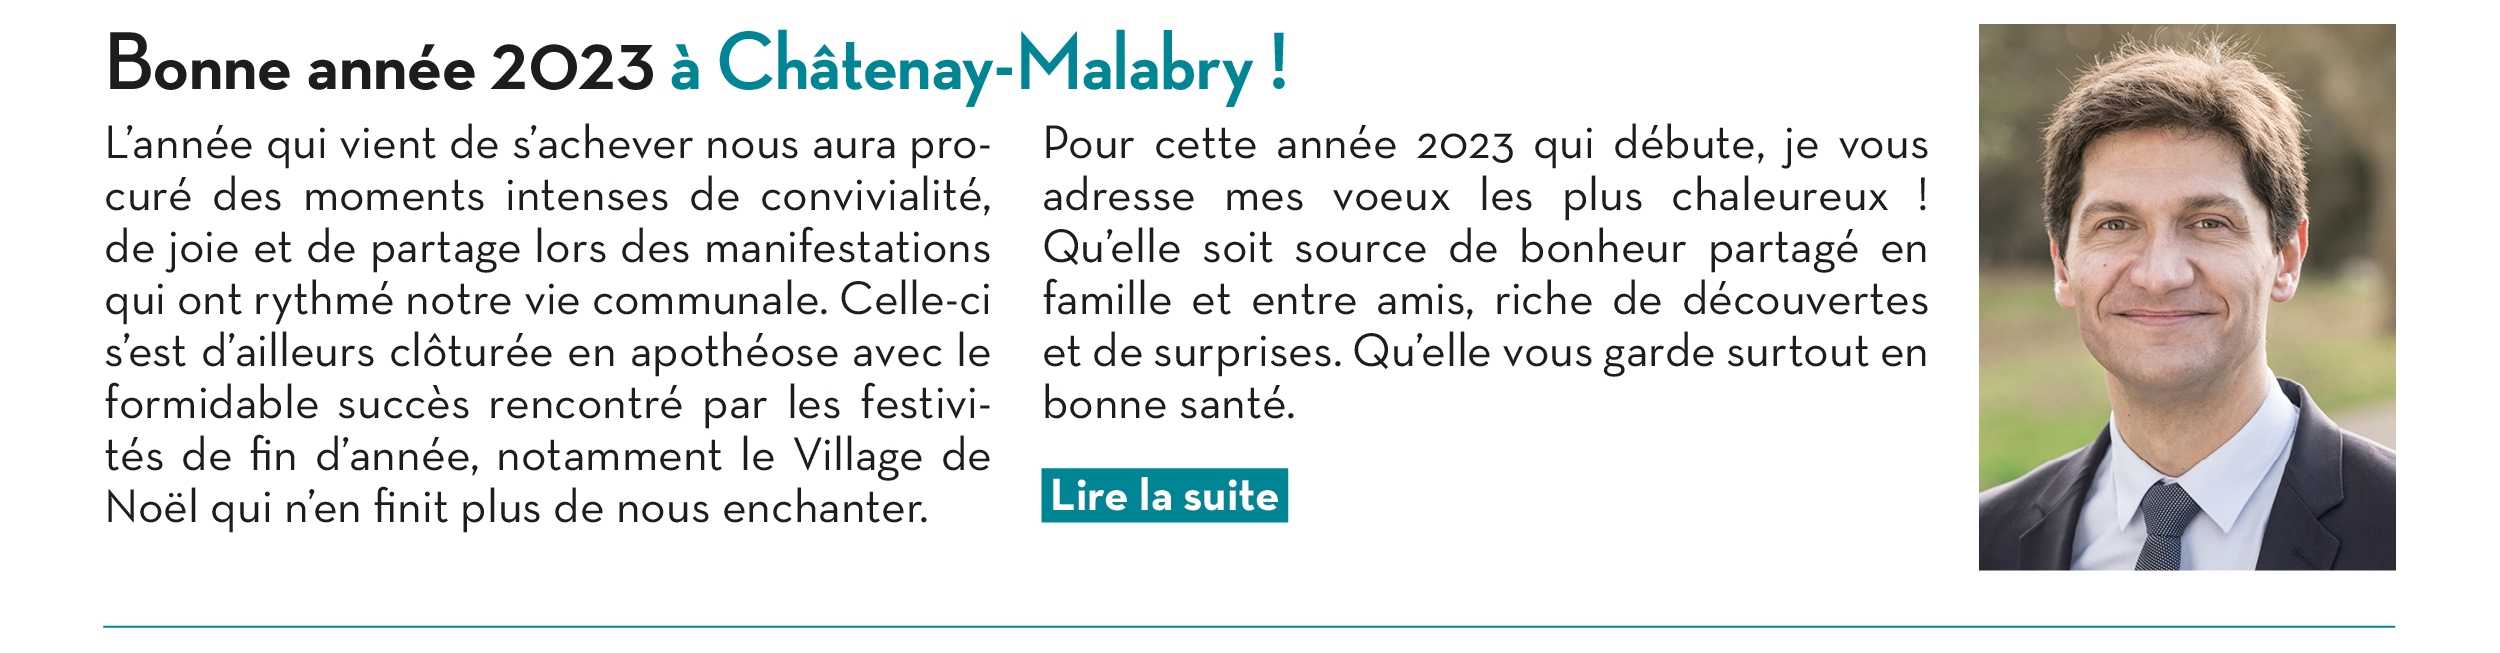 Bonne année 2023 à Châtenay-Malabry !